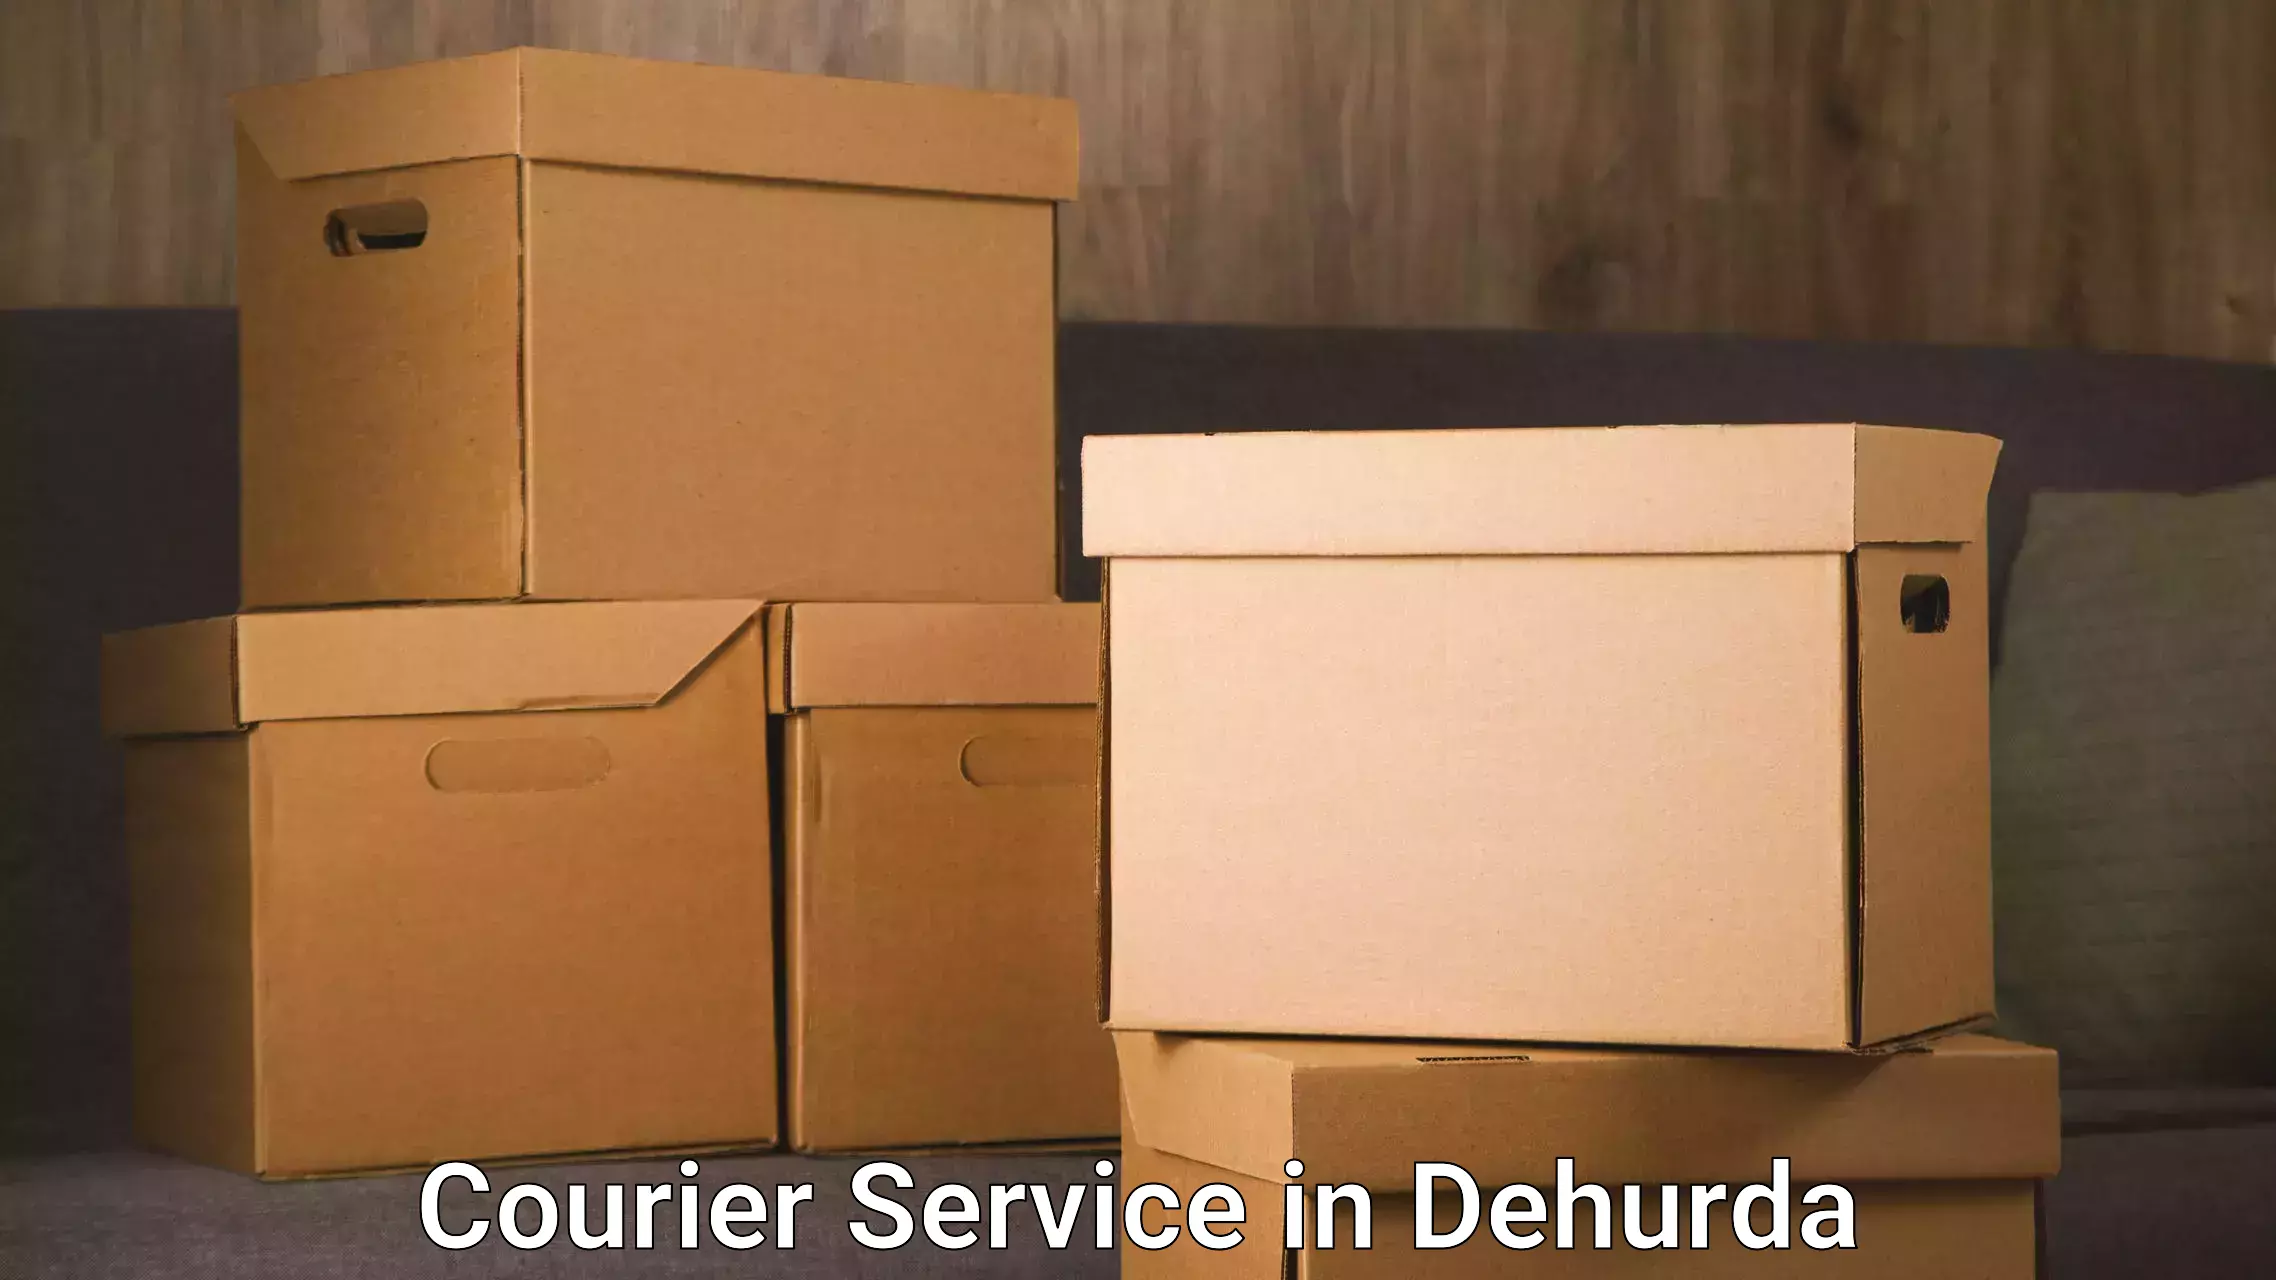 Quick parcel dispatch in Dehurda